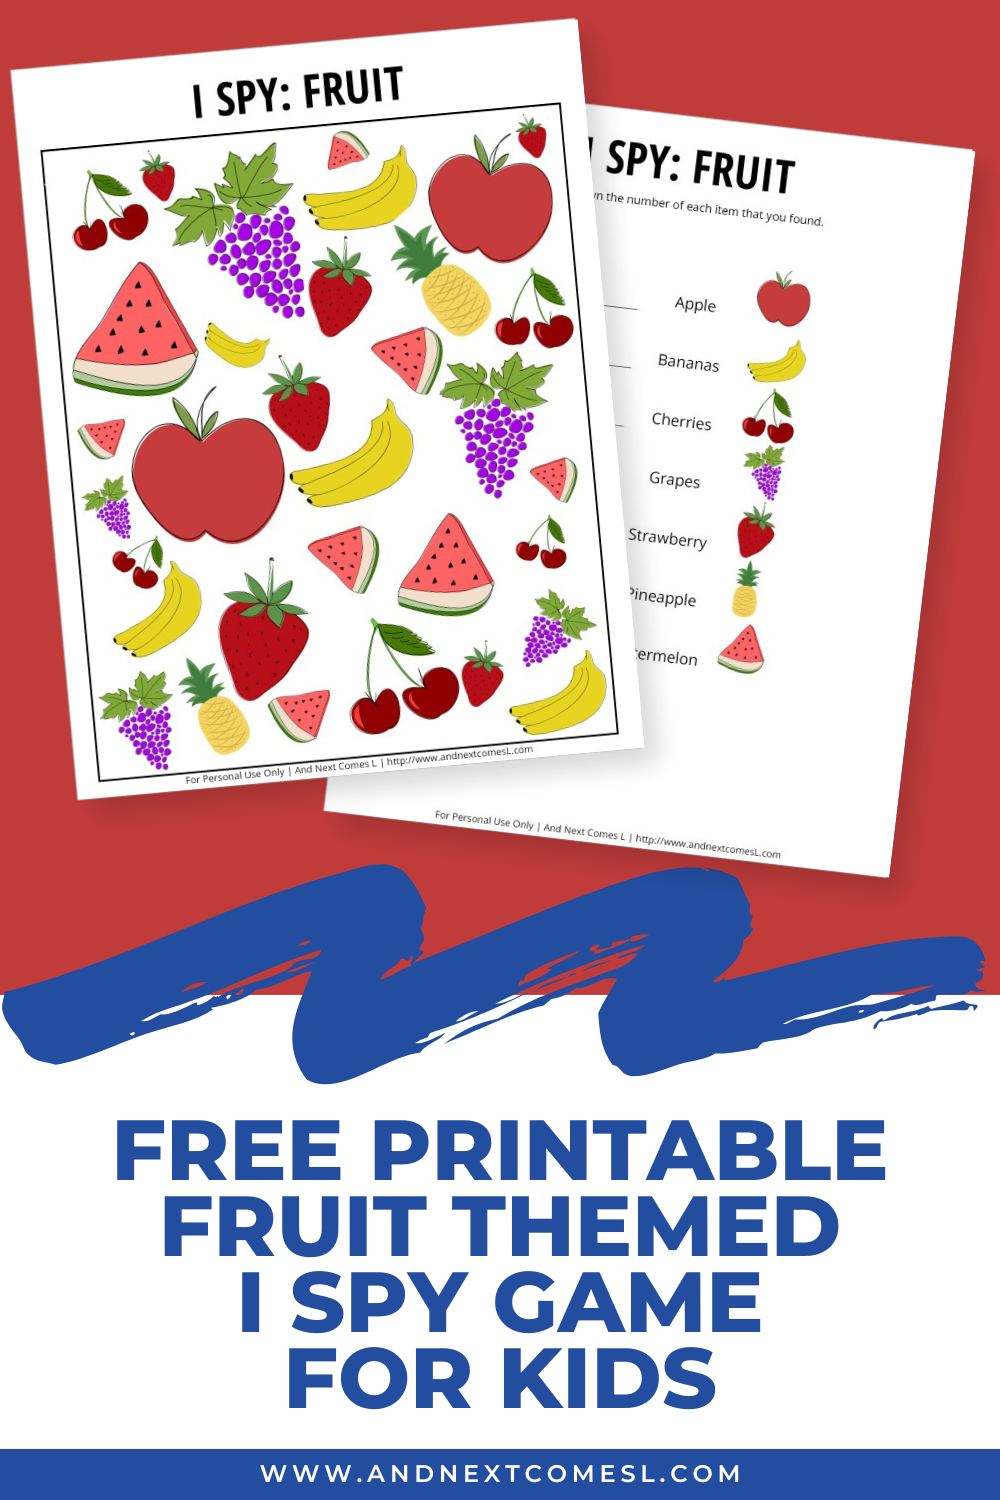 Free printable fruit themed I spy game for kids